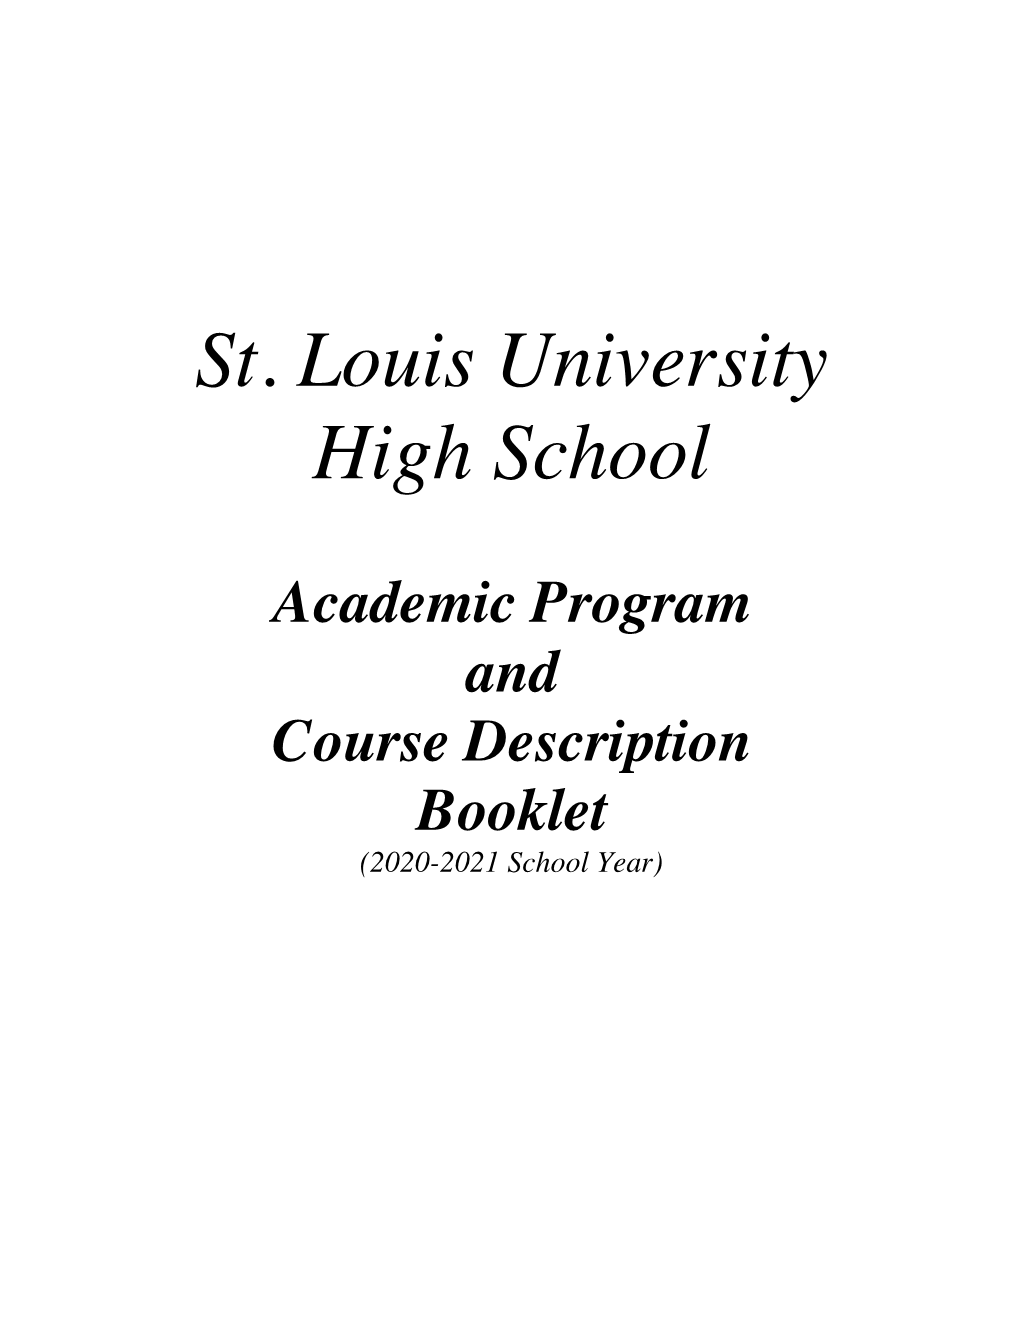 St. Louis University High School